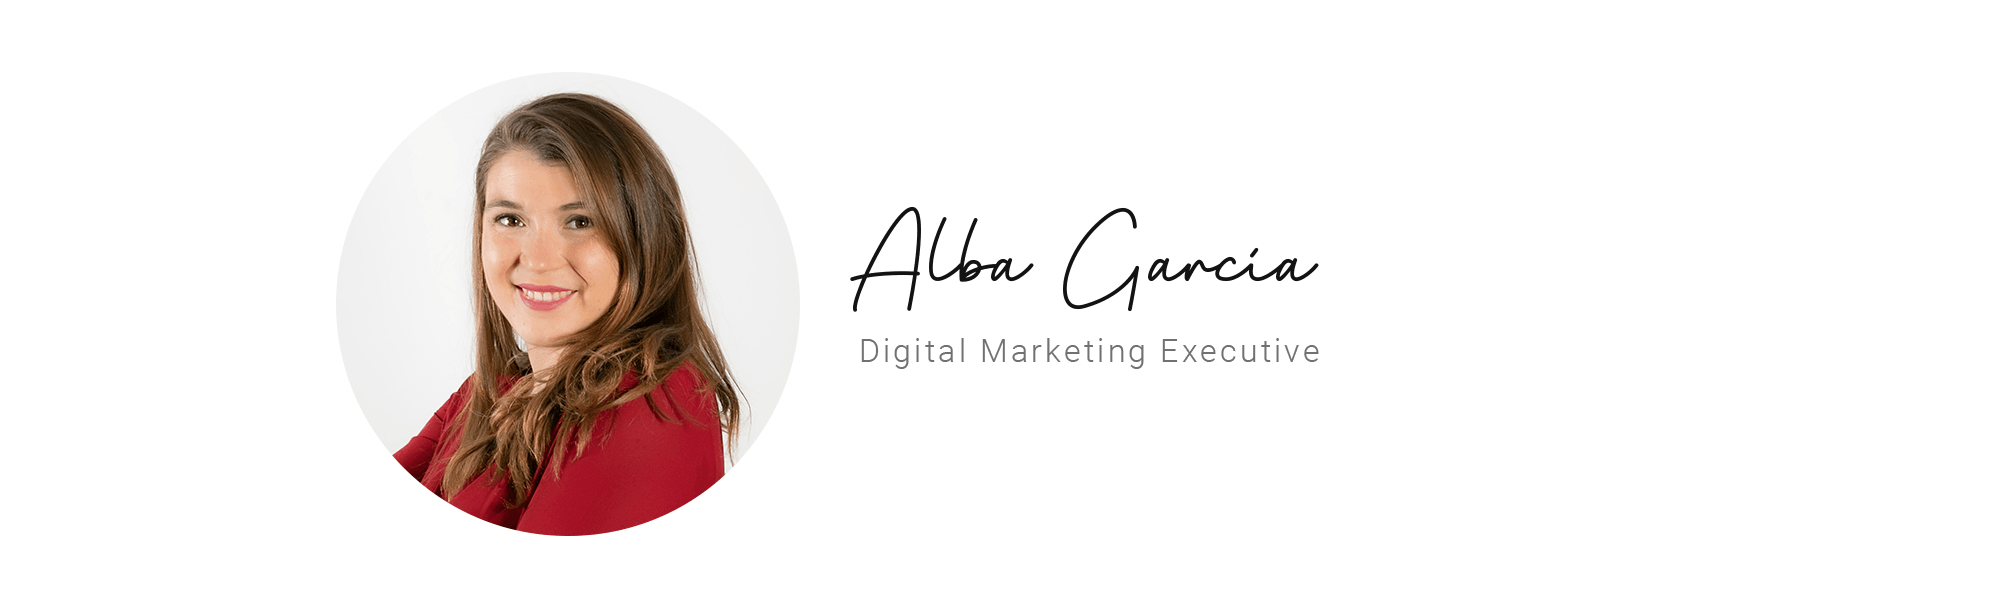 Alba Digital Marketing Executive